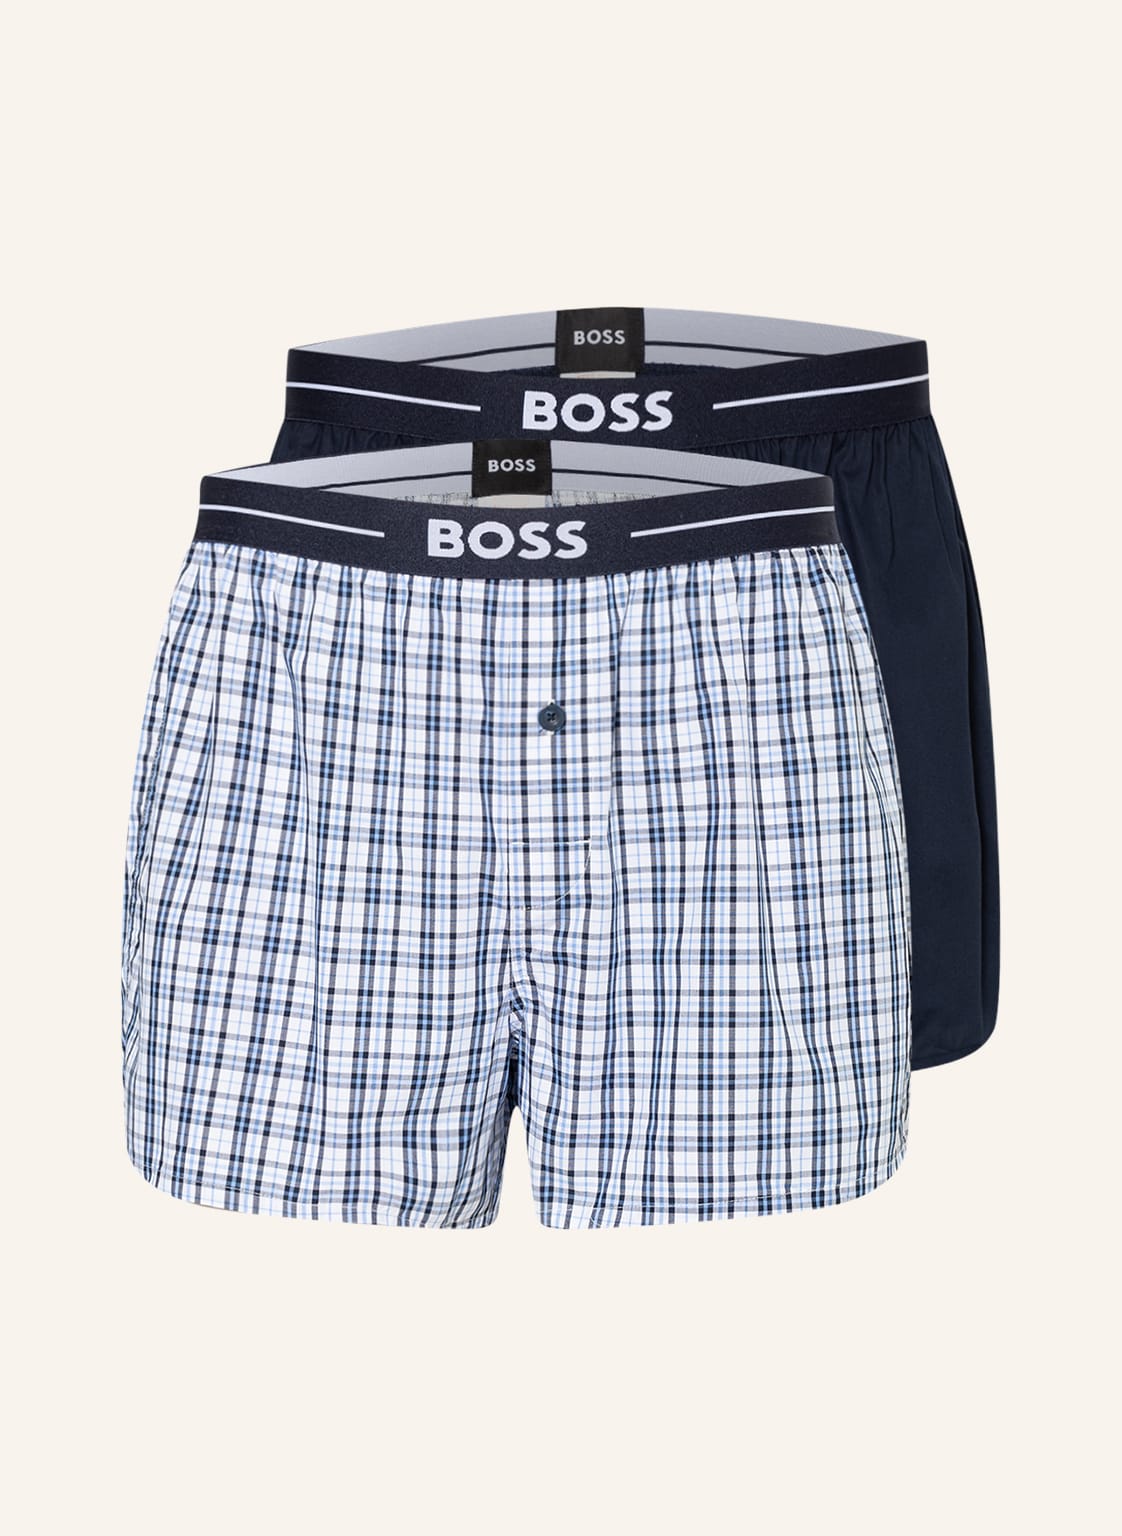 Boss 2er-Pack Web-Boxershorts blau von Boss